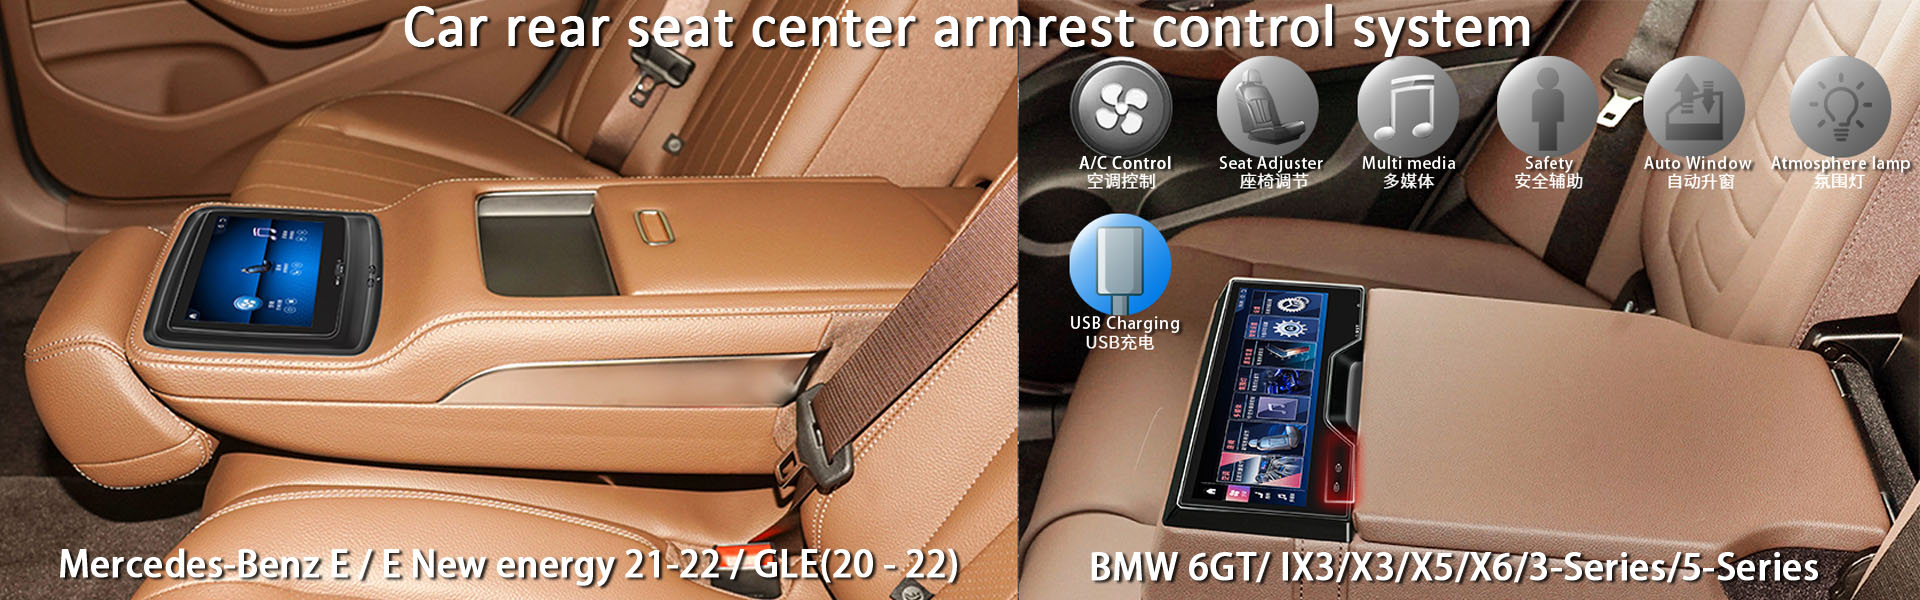 Car rear seat central armrest control system